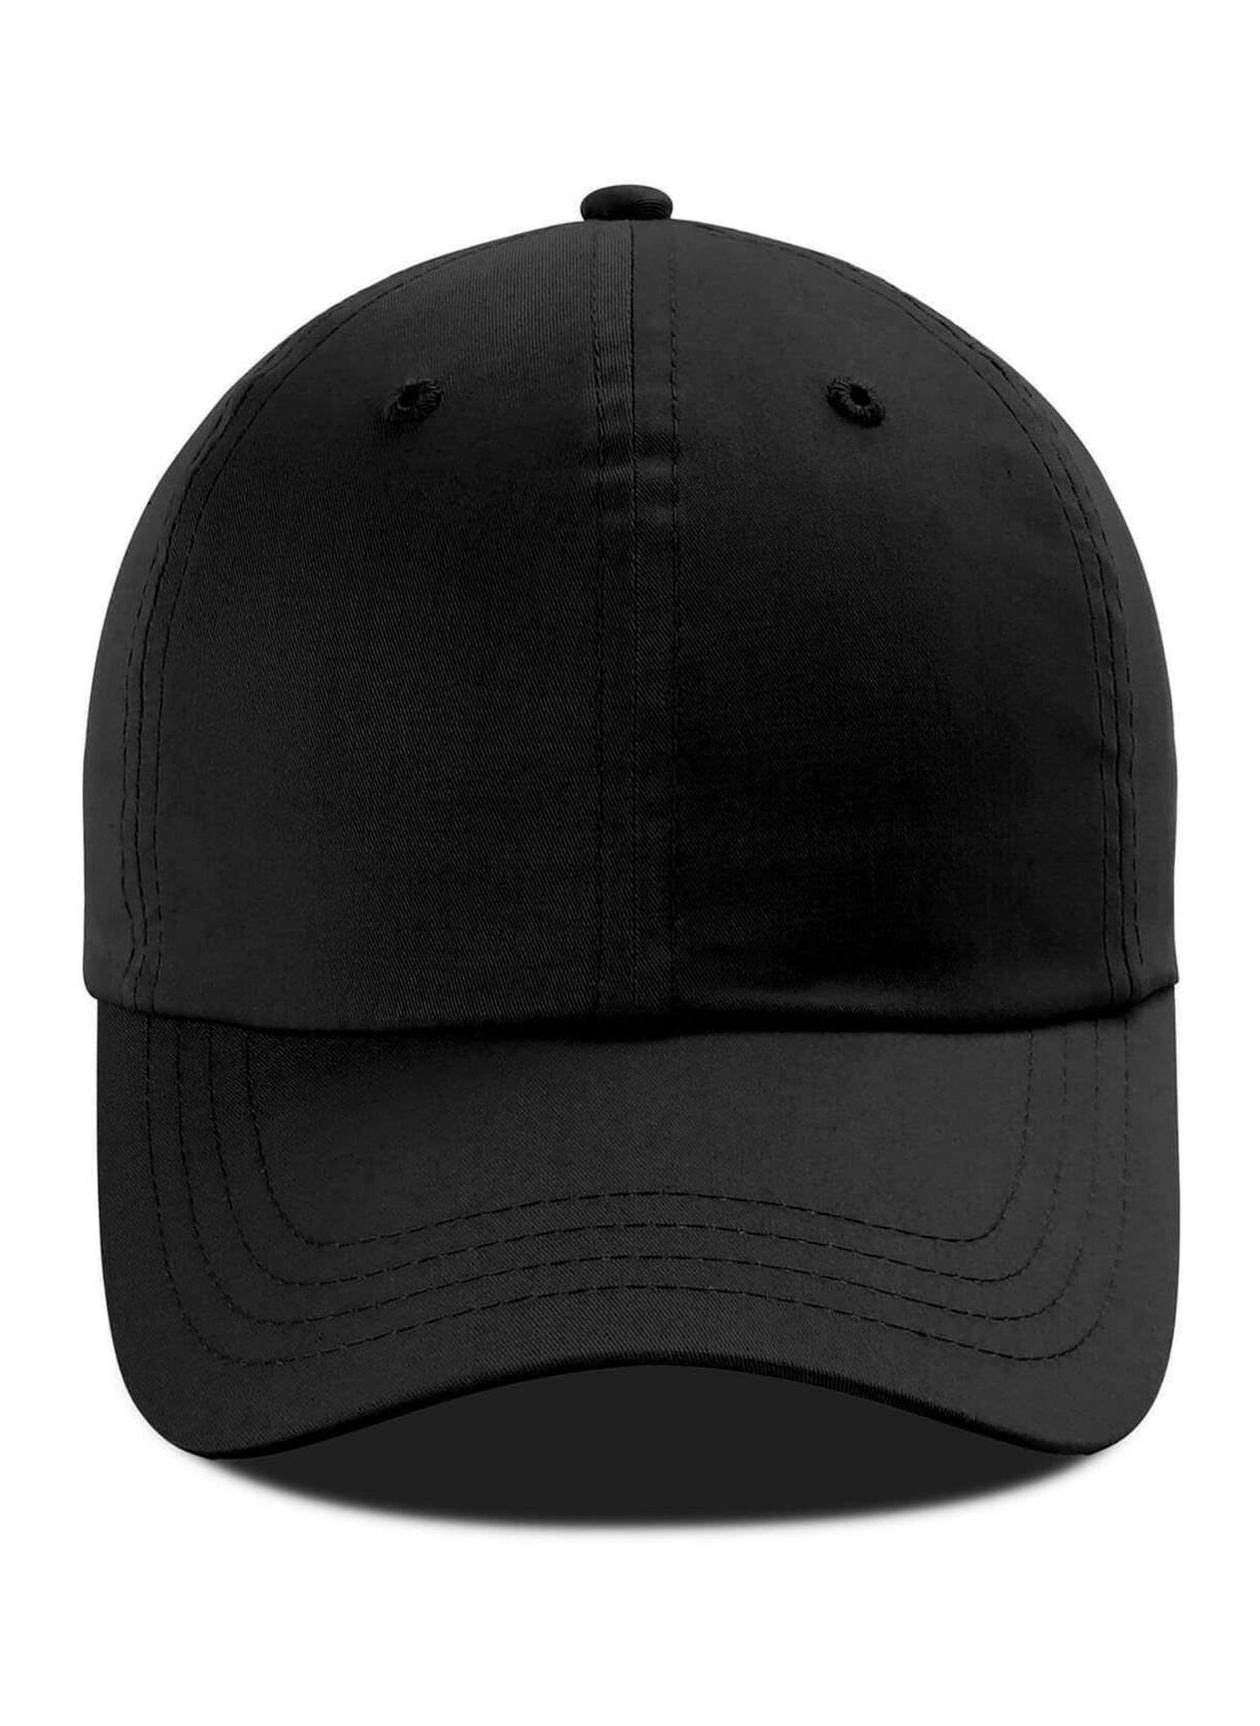 Imperial Black The Zero Lightweight Cotton Hat